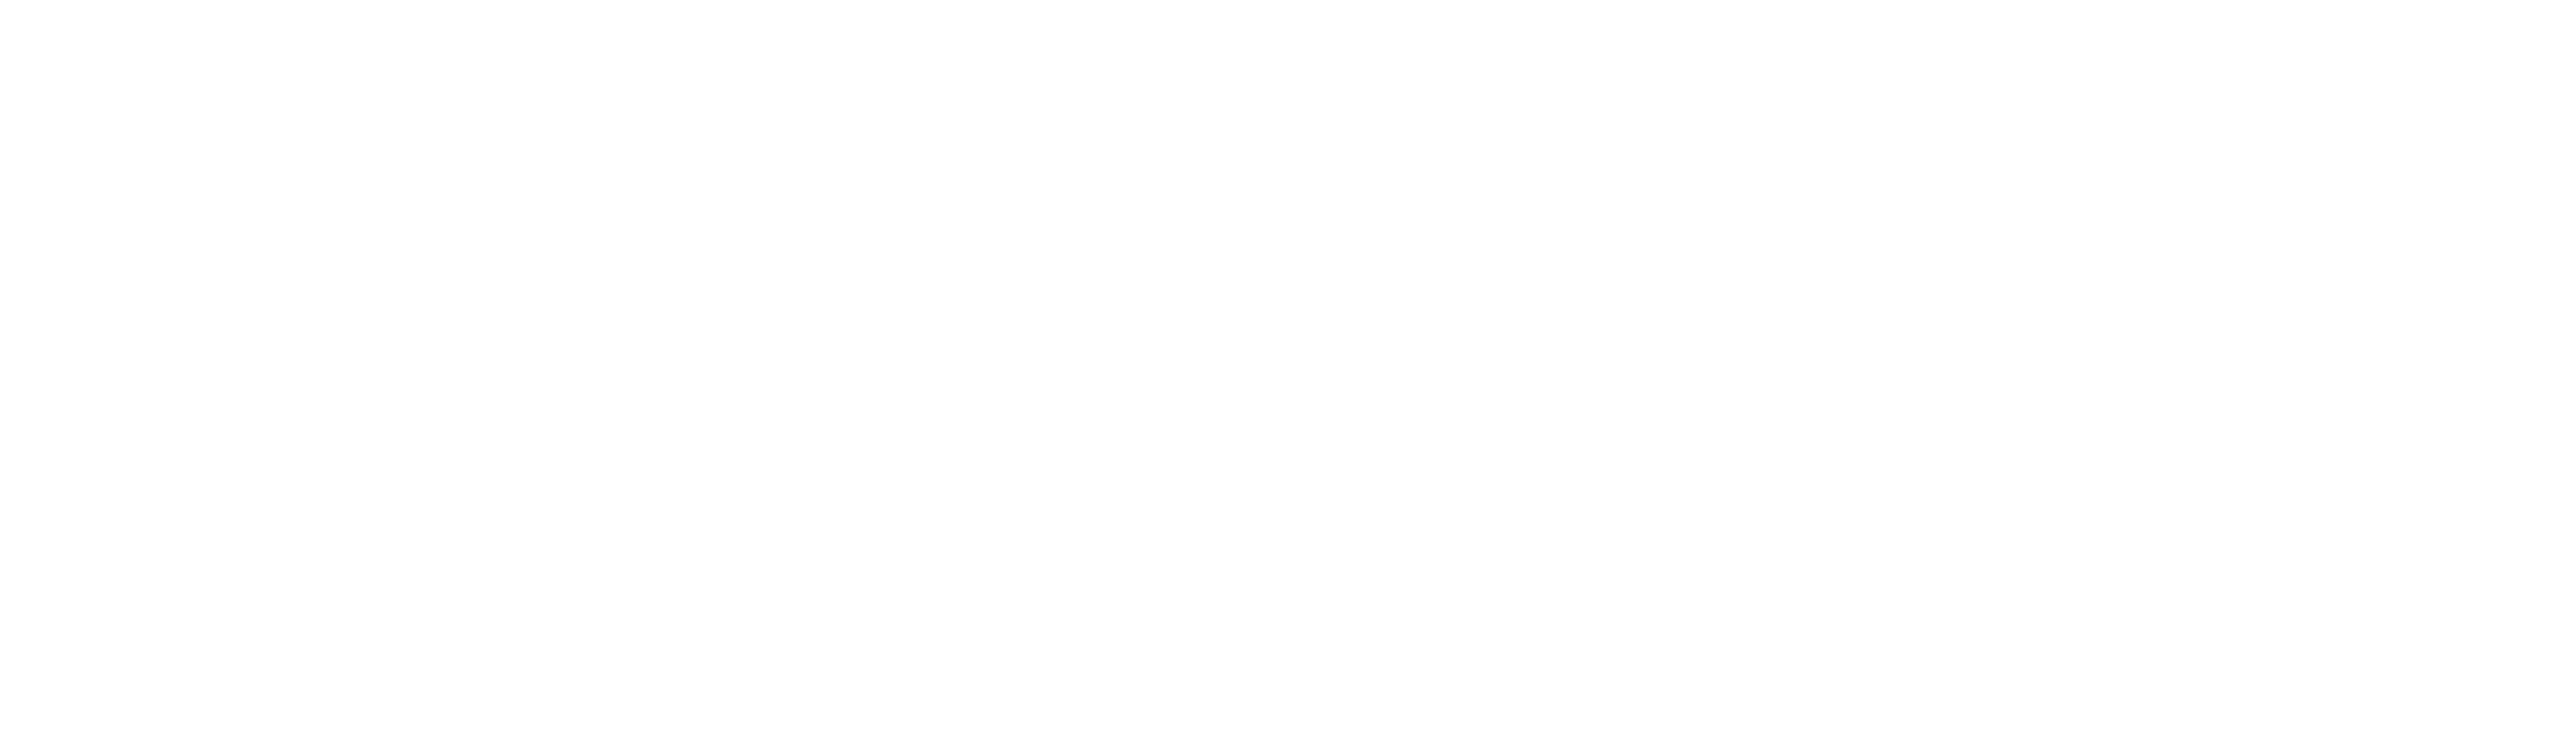 XPulser Full Logo with text in white